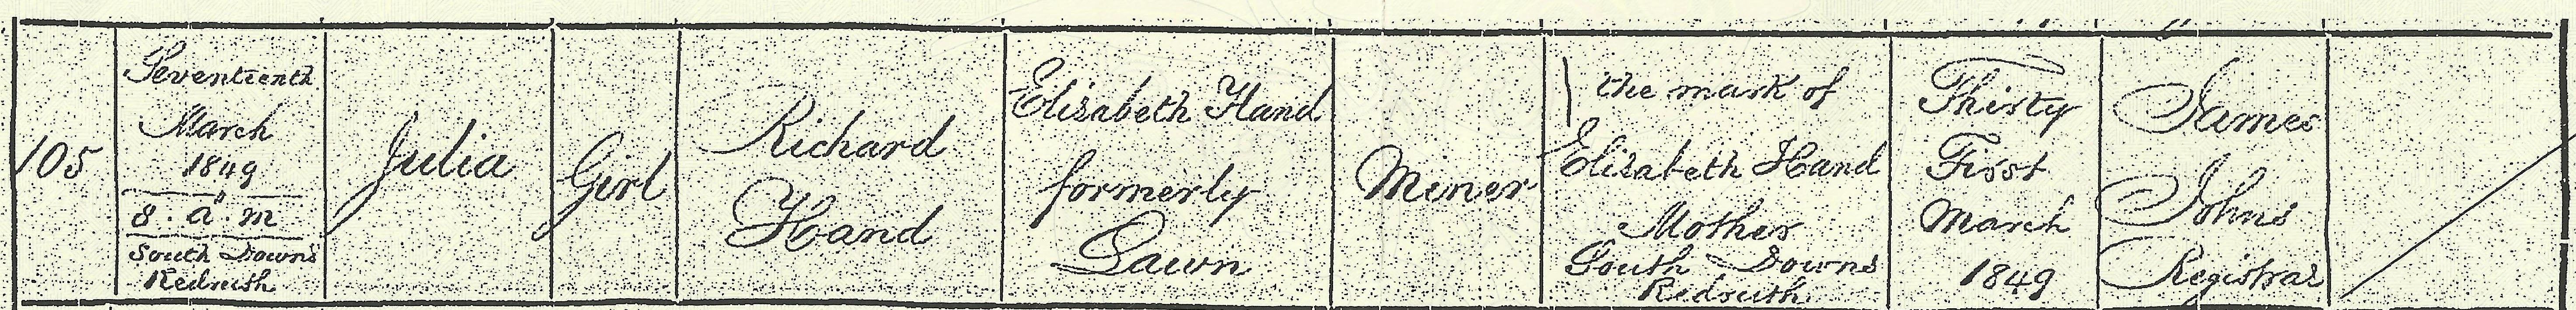 Birth Certificate of Julia Hand crop